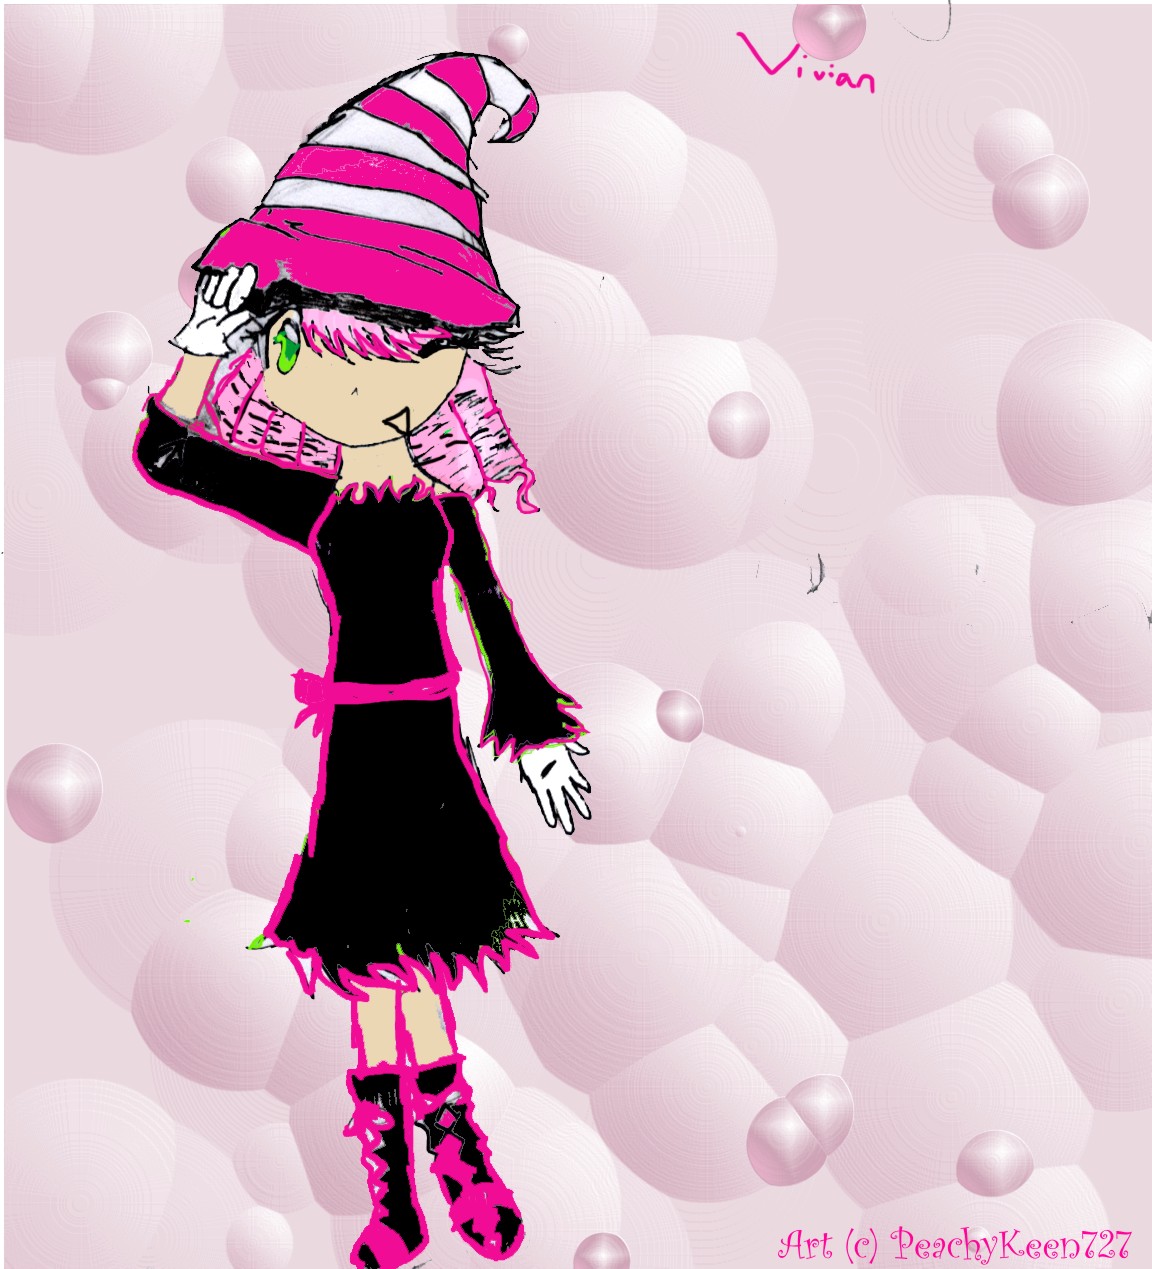 Couture Me:Vivian (redux) by AshleySorceress727